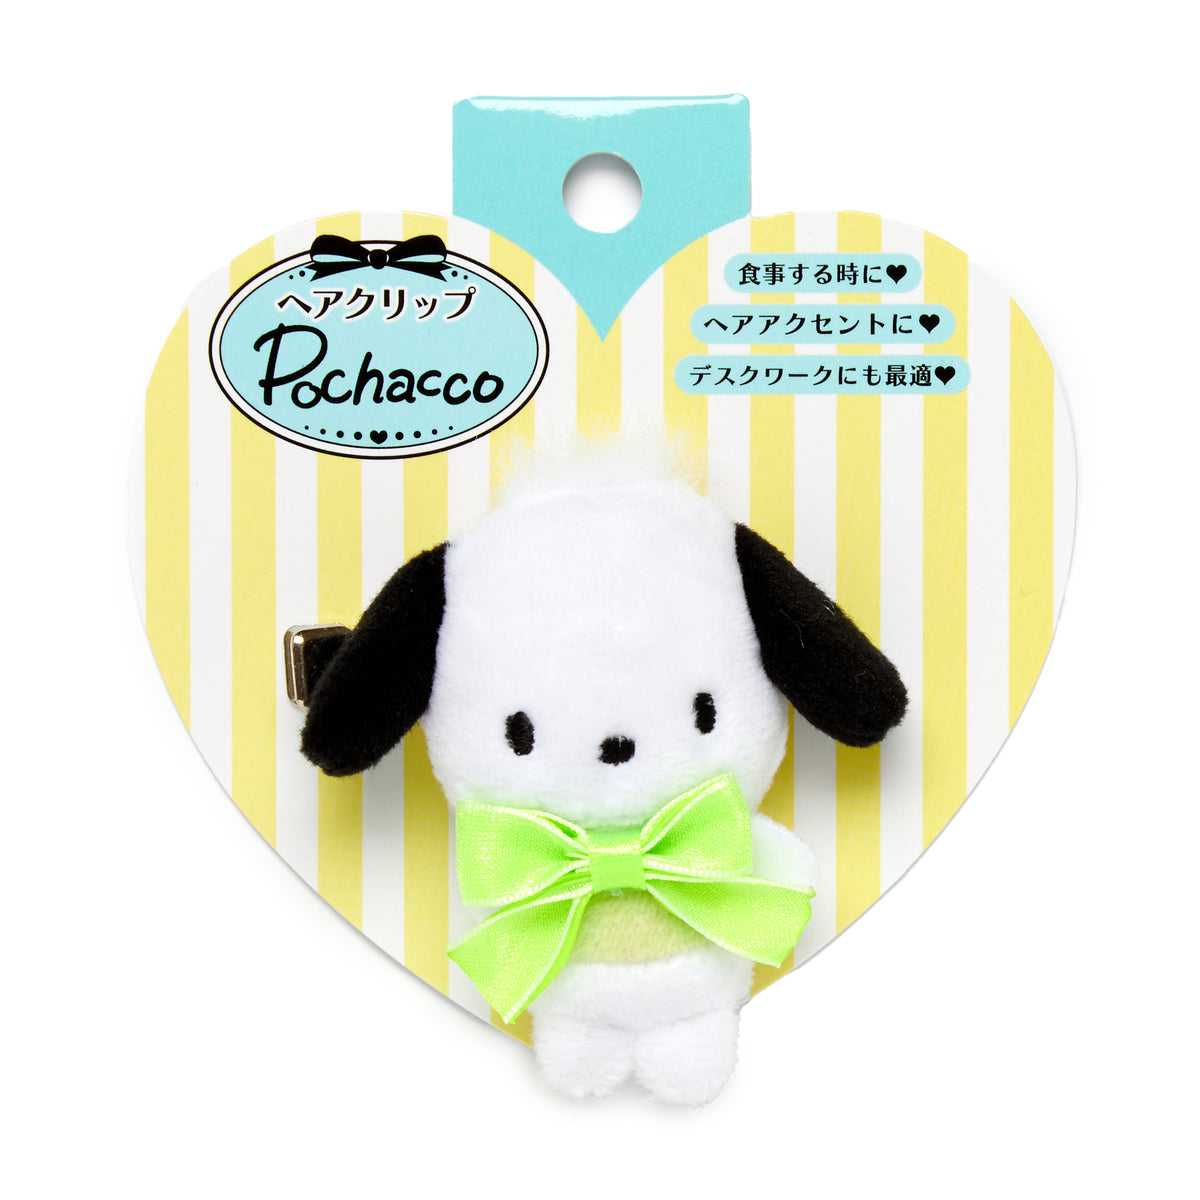 Pochacco Mascot Hair Clip Accessory Japan Original   